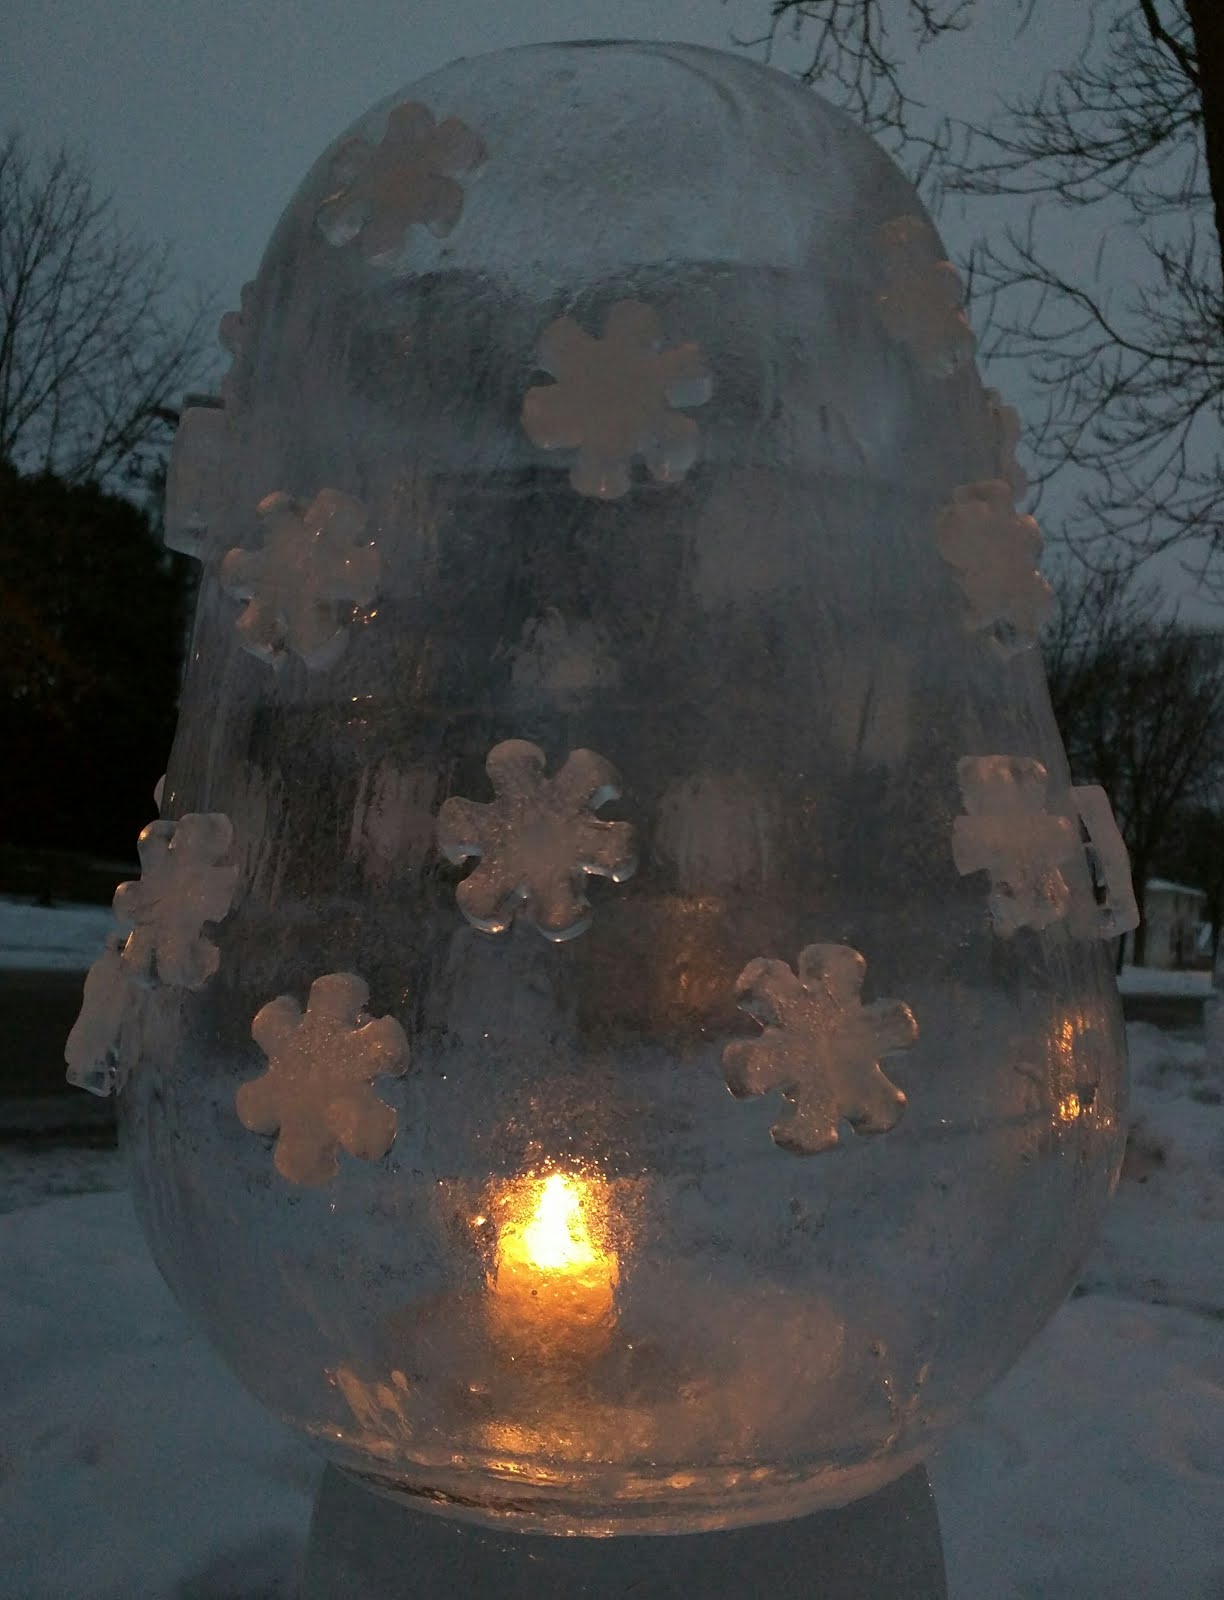 How To Make Ice Lanterns 